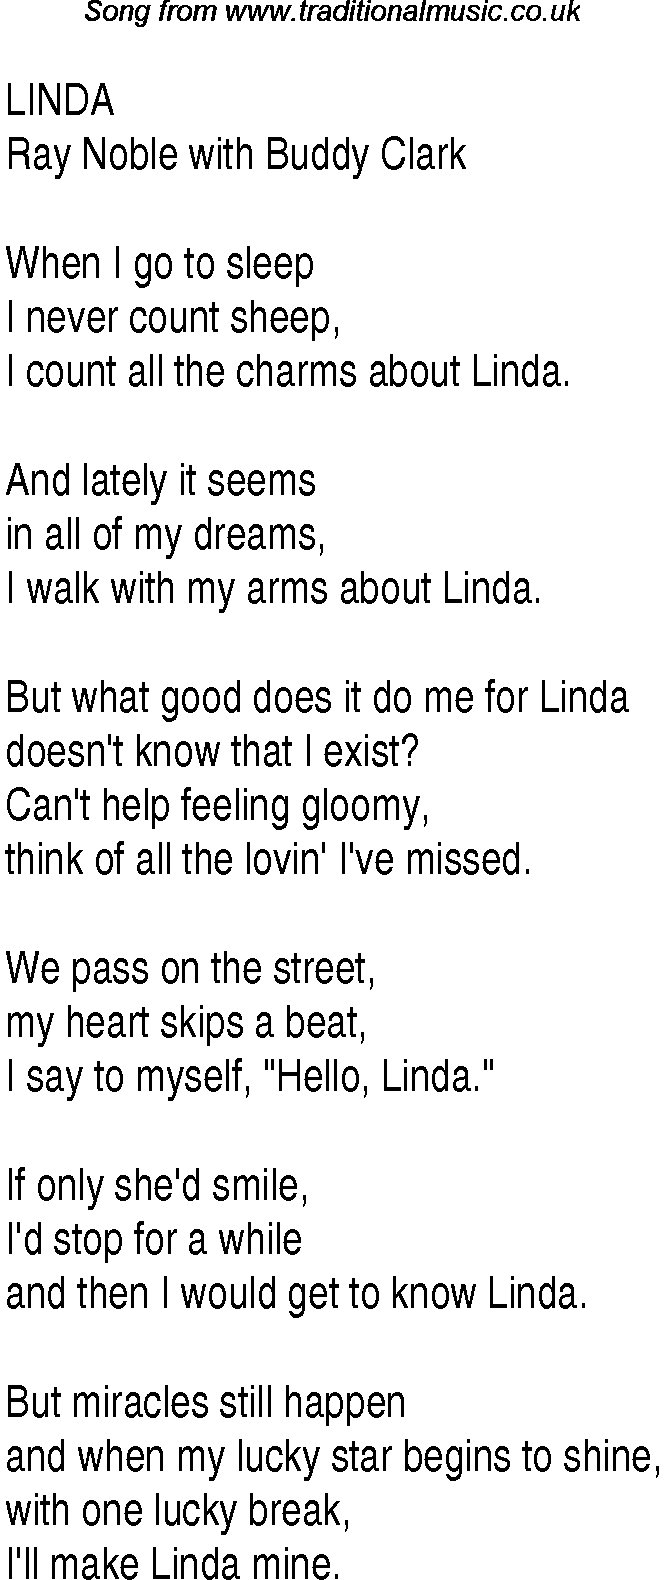 Music charts top songs 1947 - lyrics for Linda